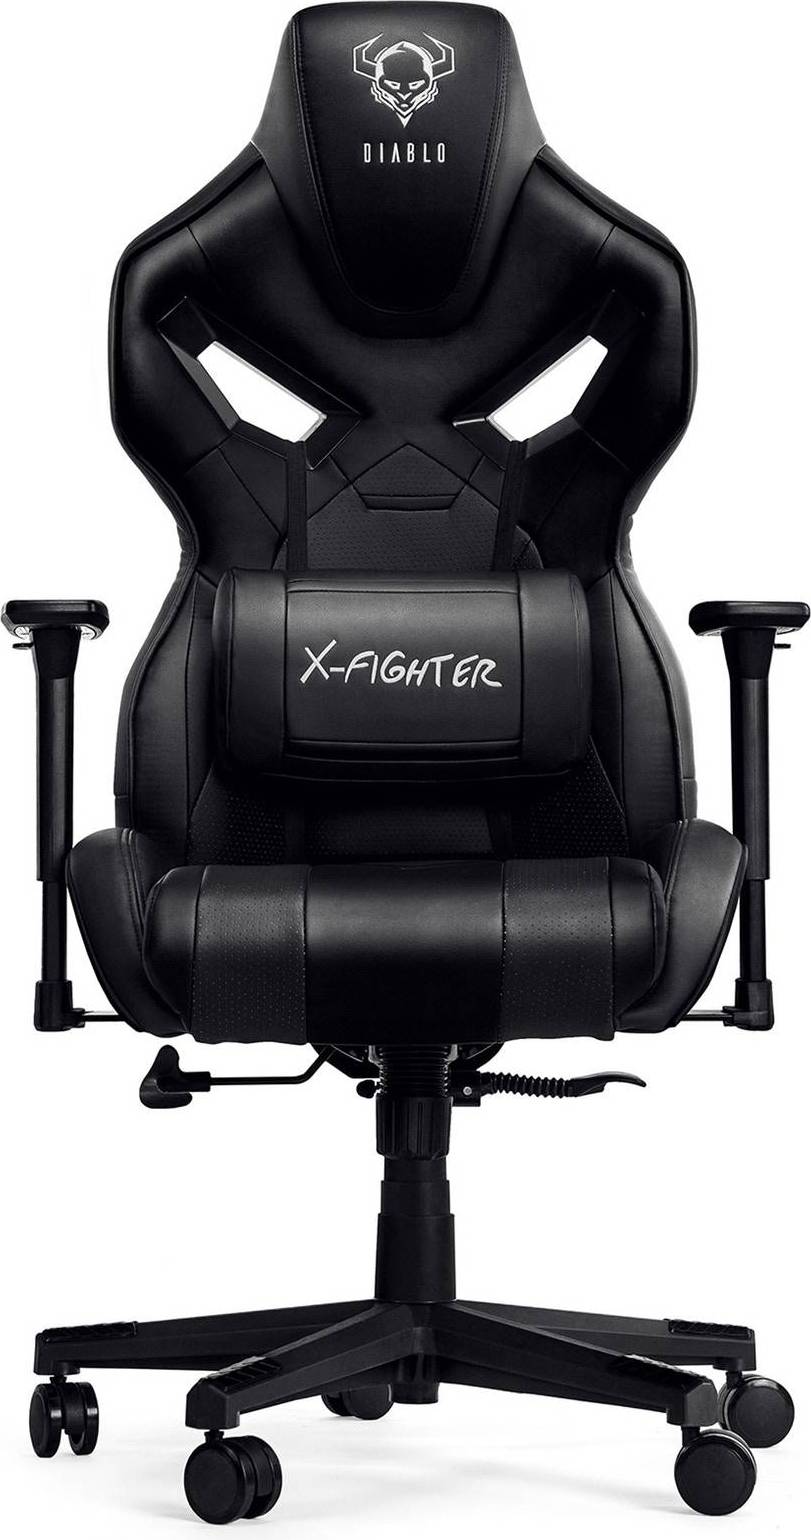  Bild på Diablo X-Fighter Gaming Chair - Black gamingstol